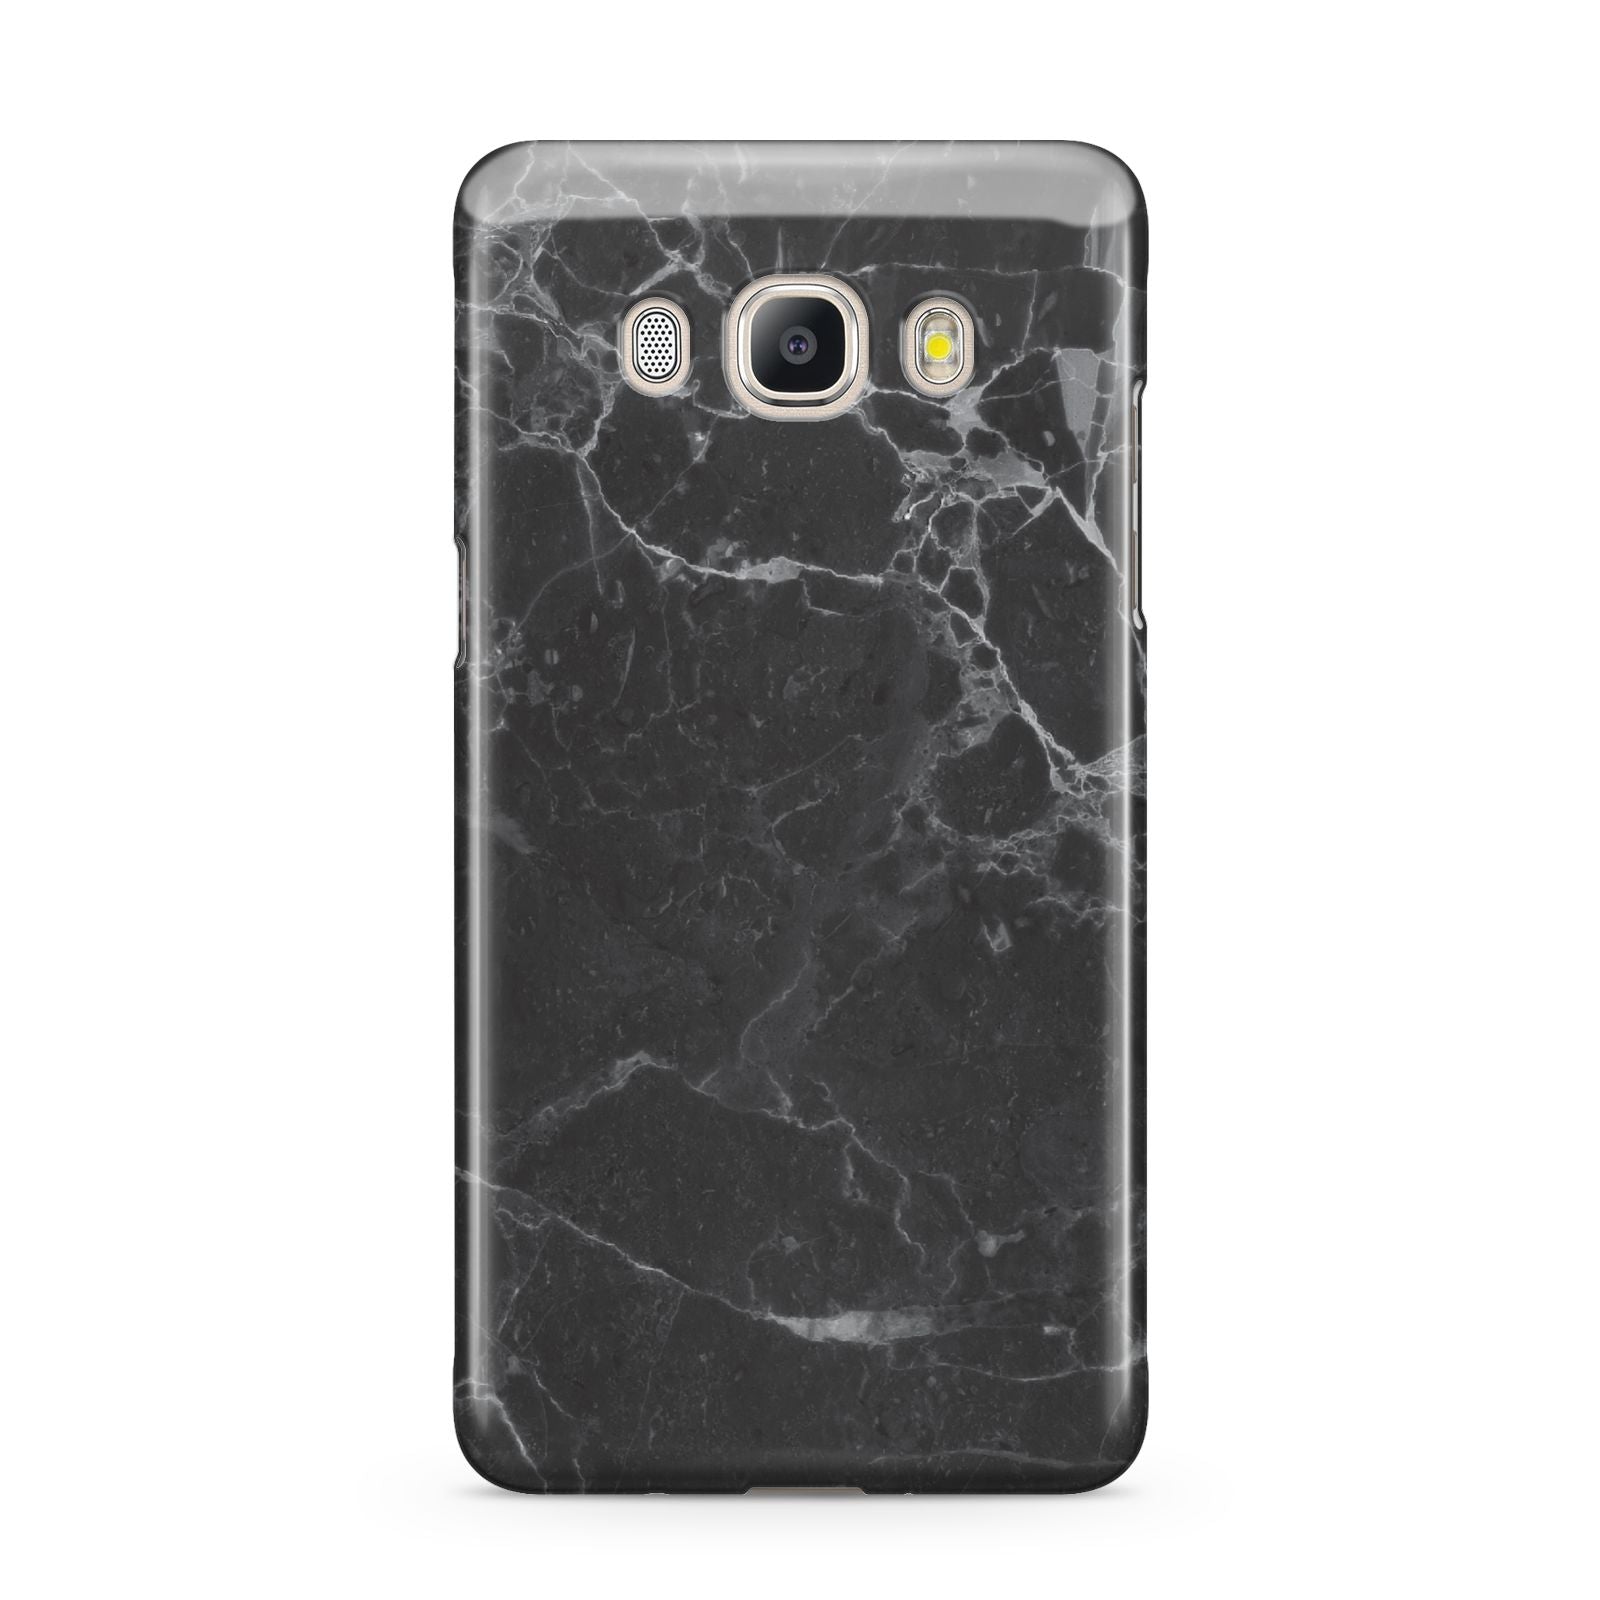 Faux Marble Effect Black Samsung Galaxy J5 2016 Case